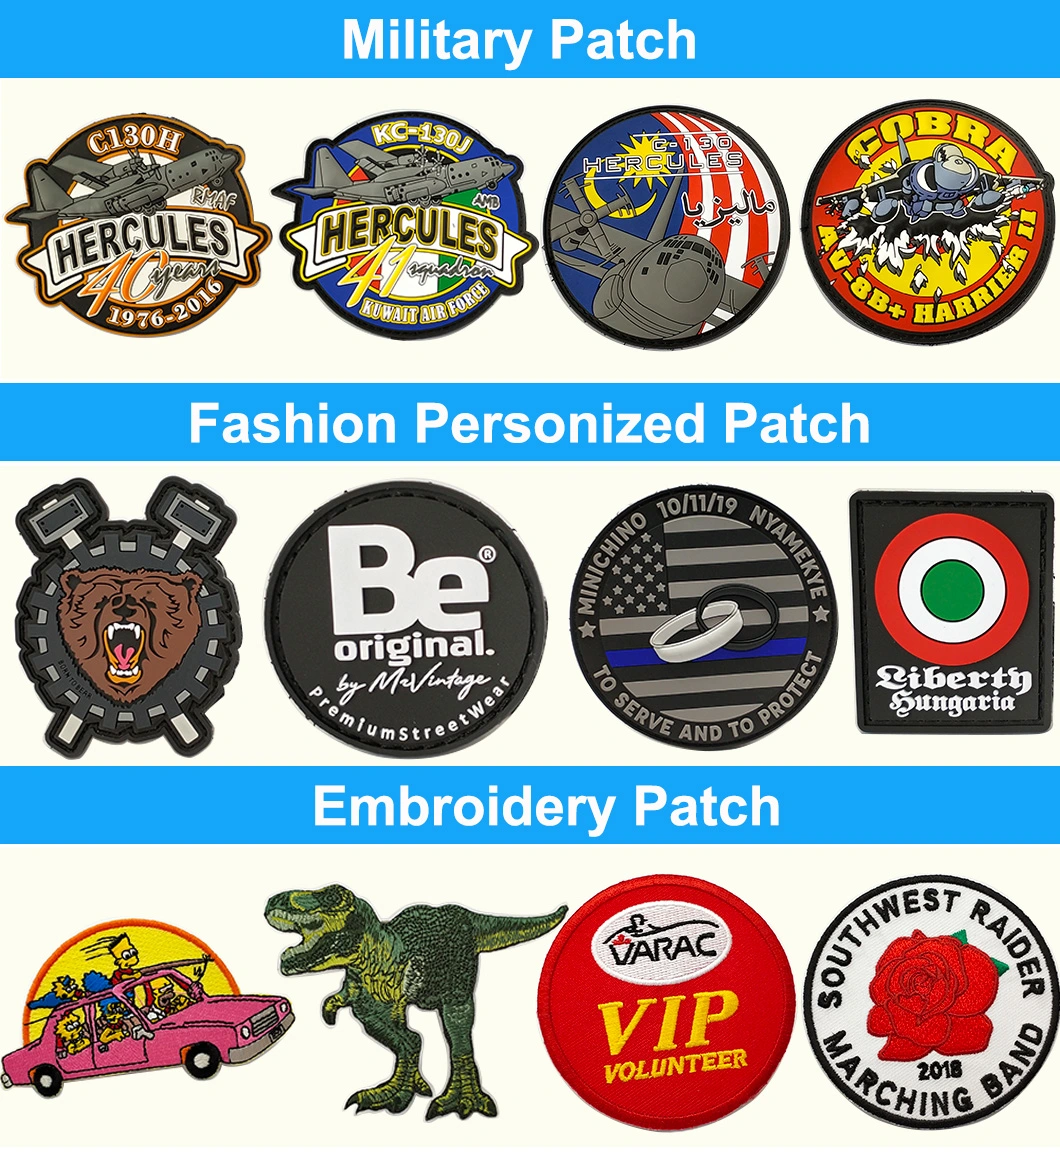 Wholesale Custom PVC Rubber Arts Crafts Air Fore Tactical Gear Uniform Emblem Garment Accessories Patch Supplies Handmade Embroidery Badges